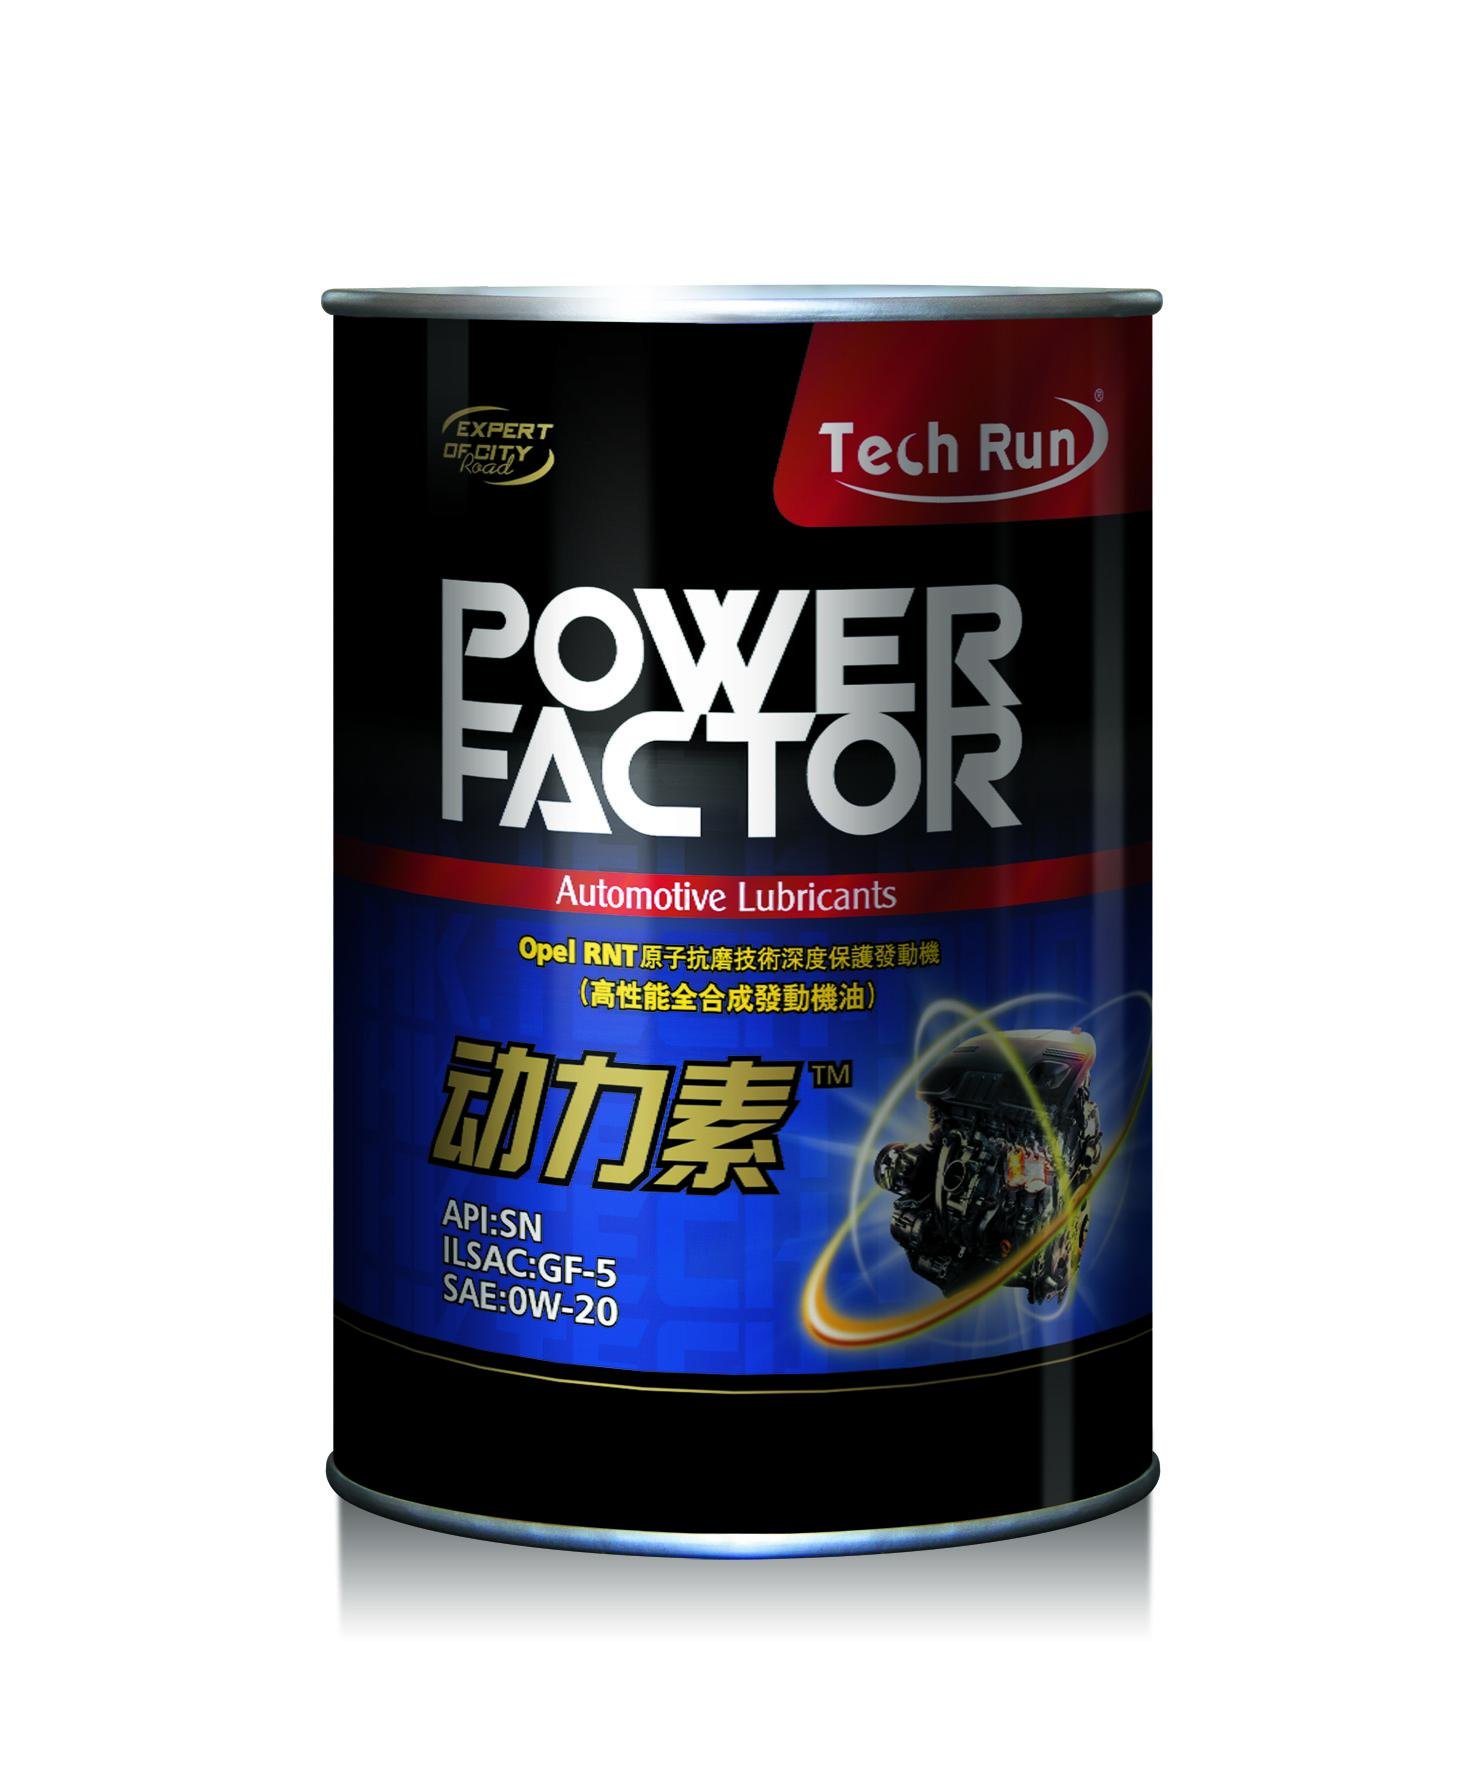 "Power Factor" Automotive Lubricants